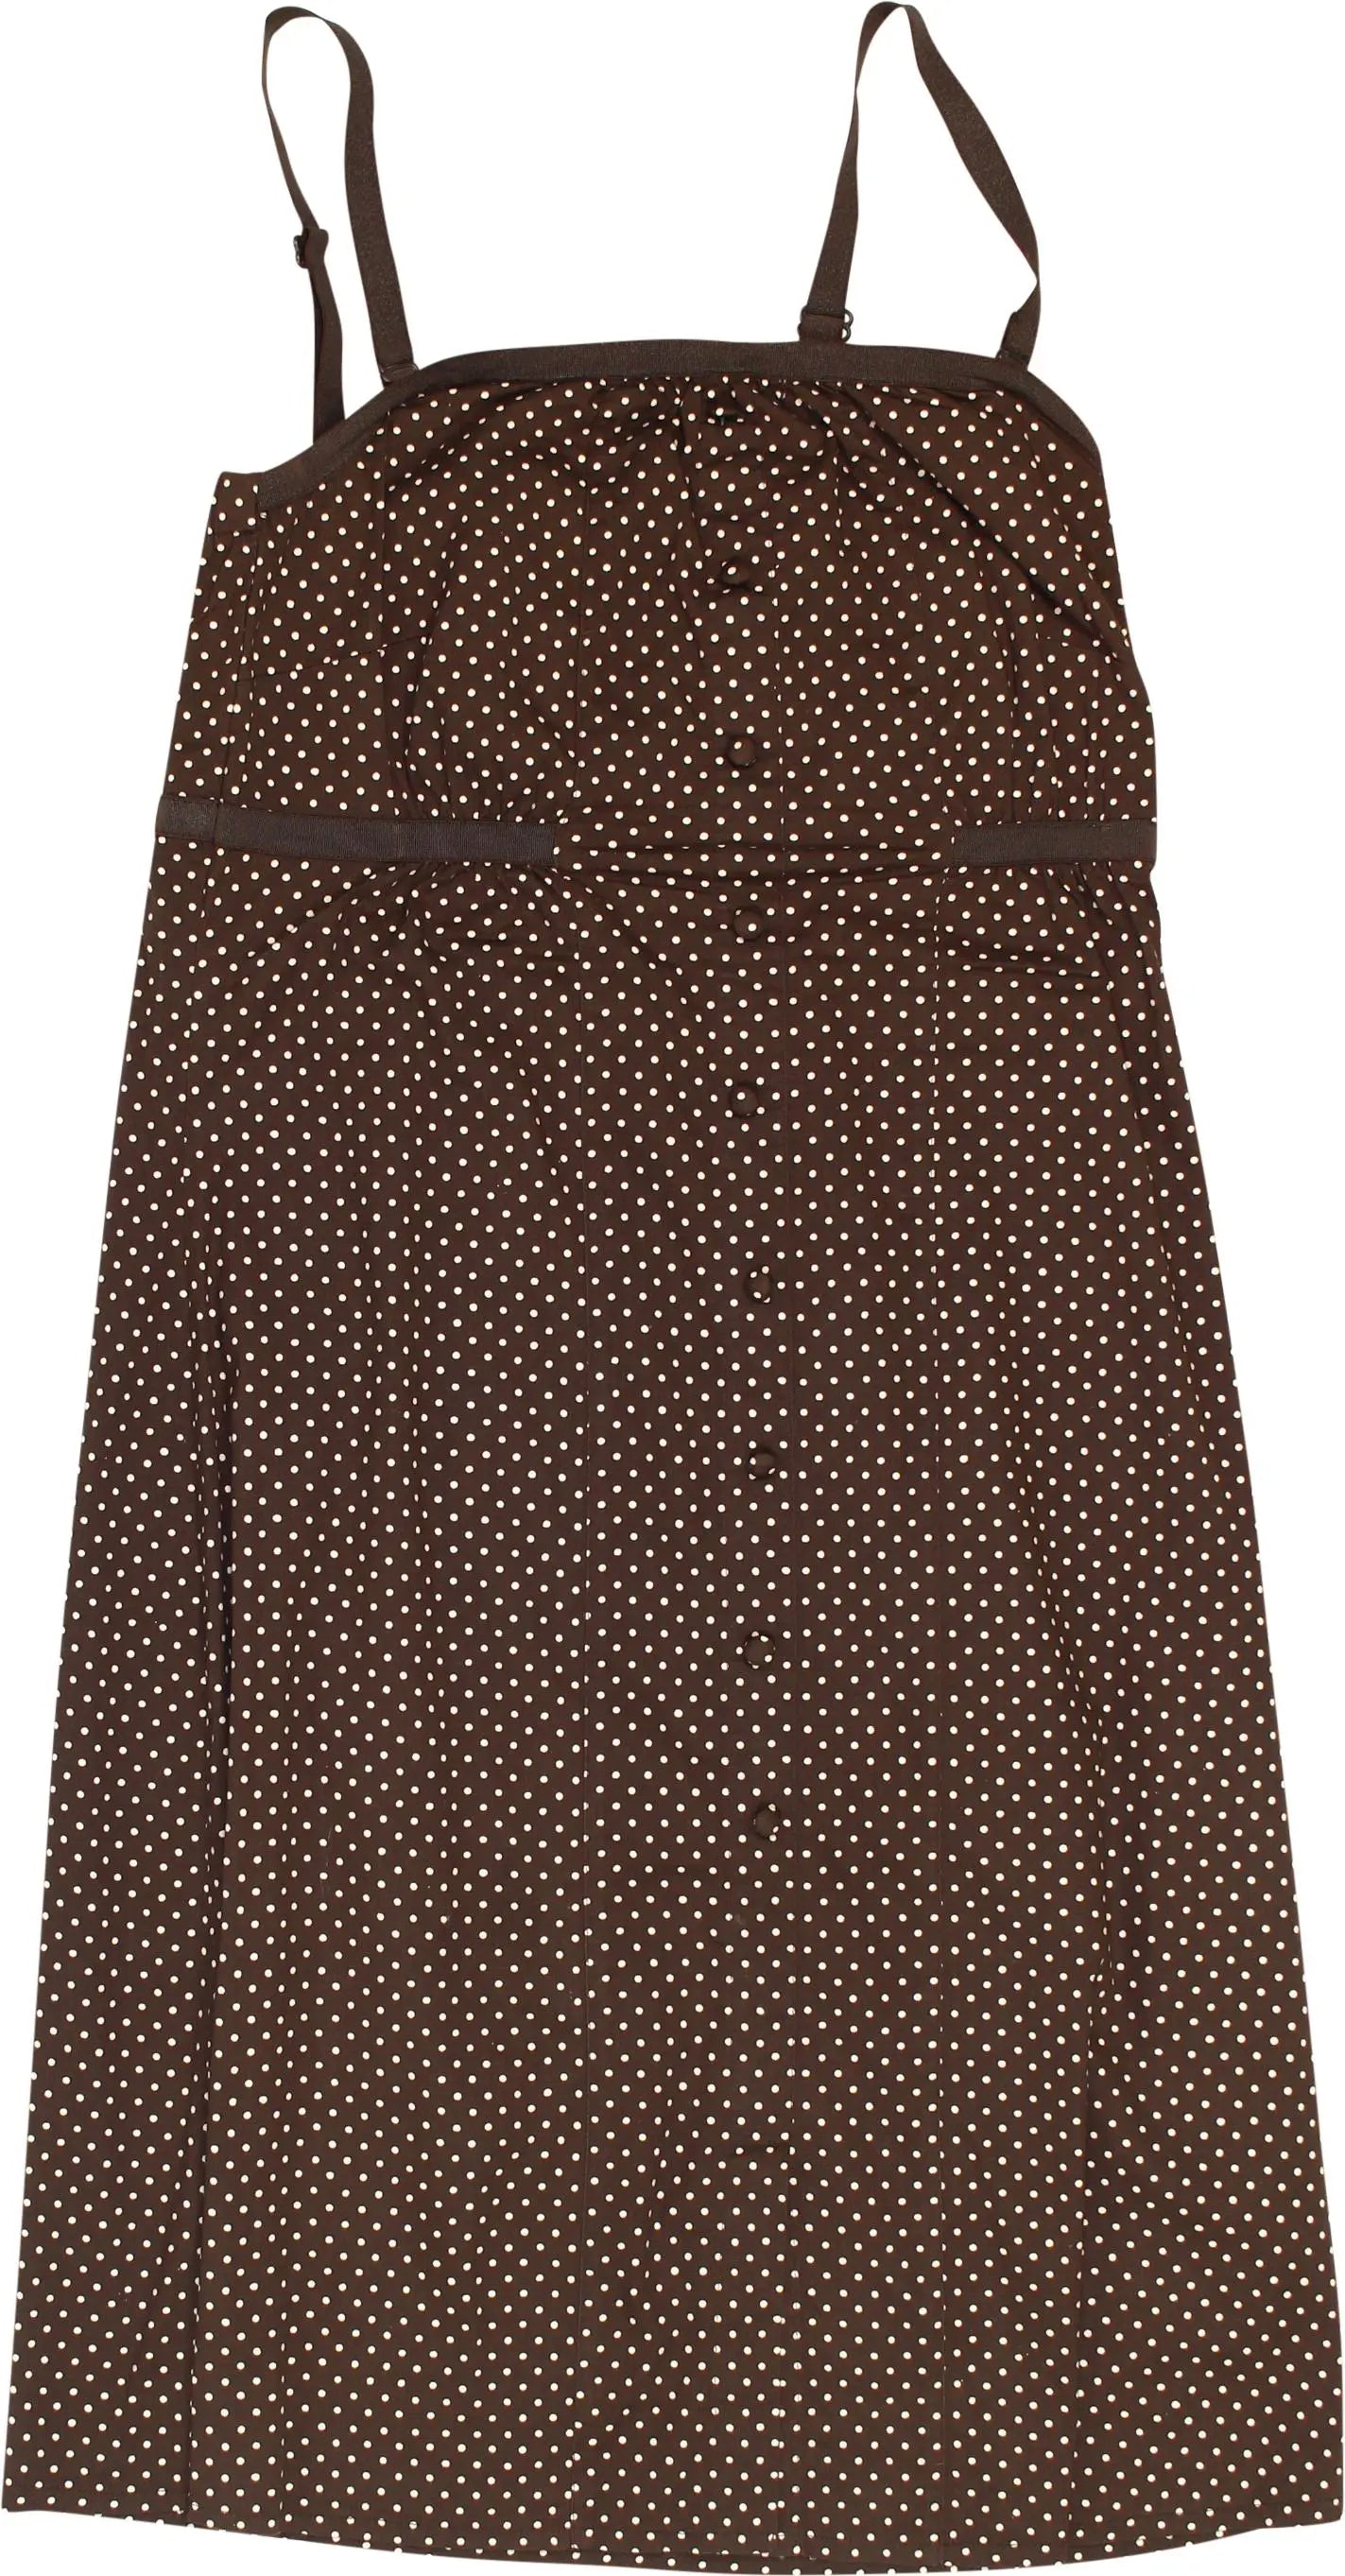 Vero Moda - Polka Dot Dress- ThriftTale.com - Vintage and second handclothing